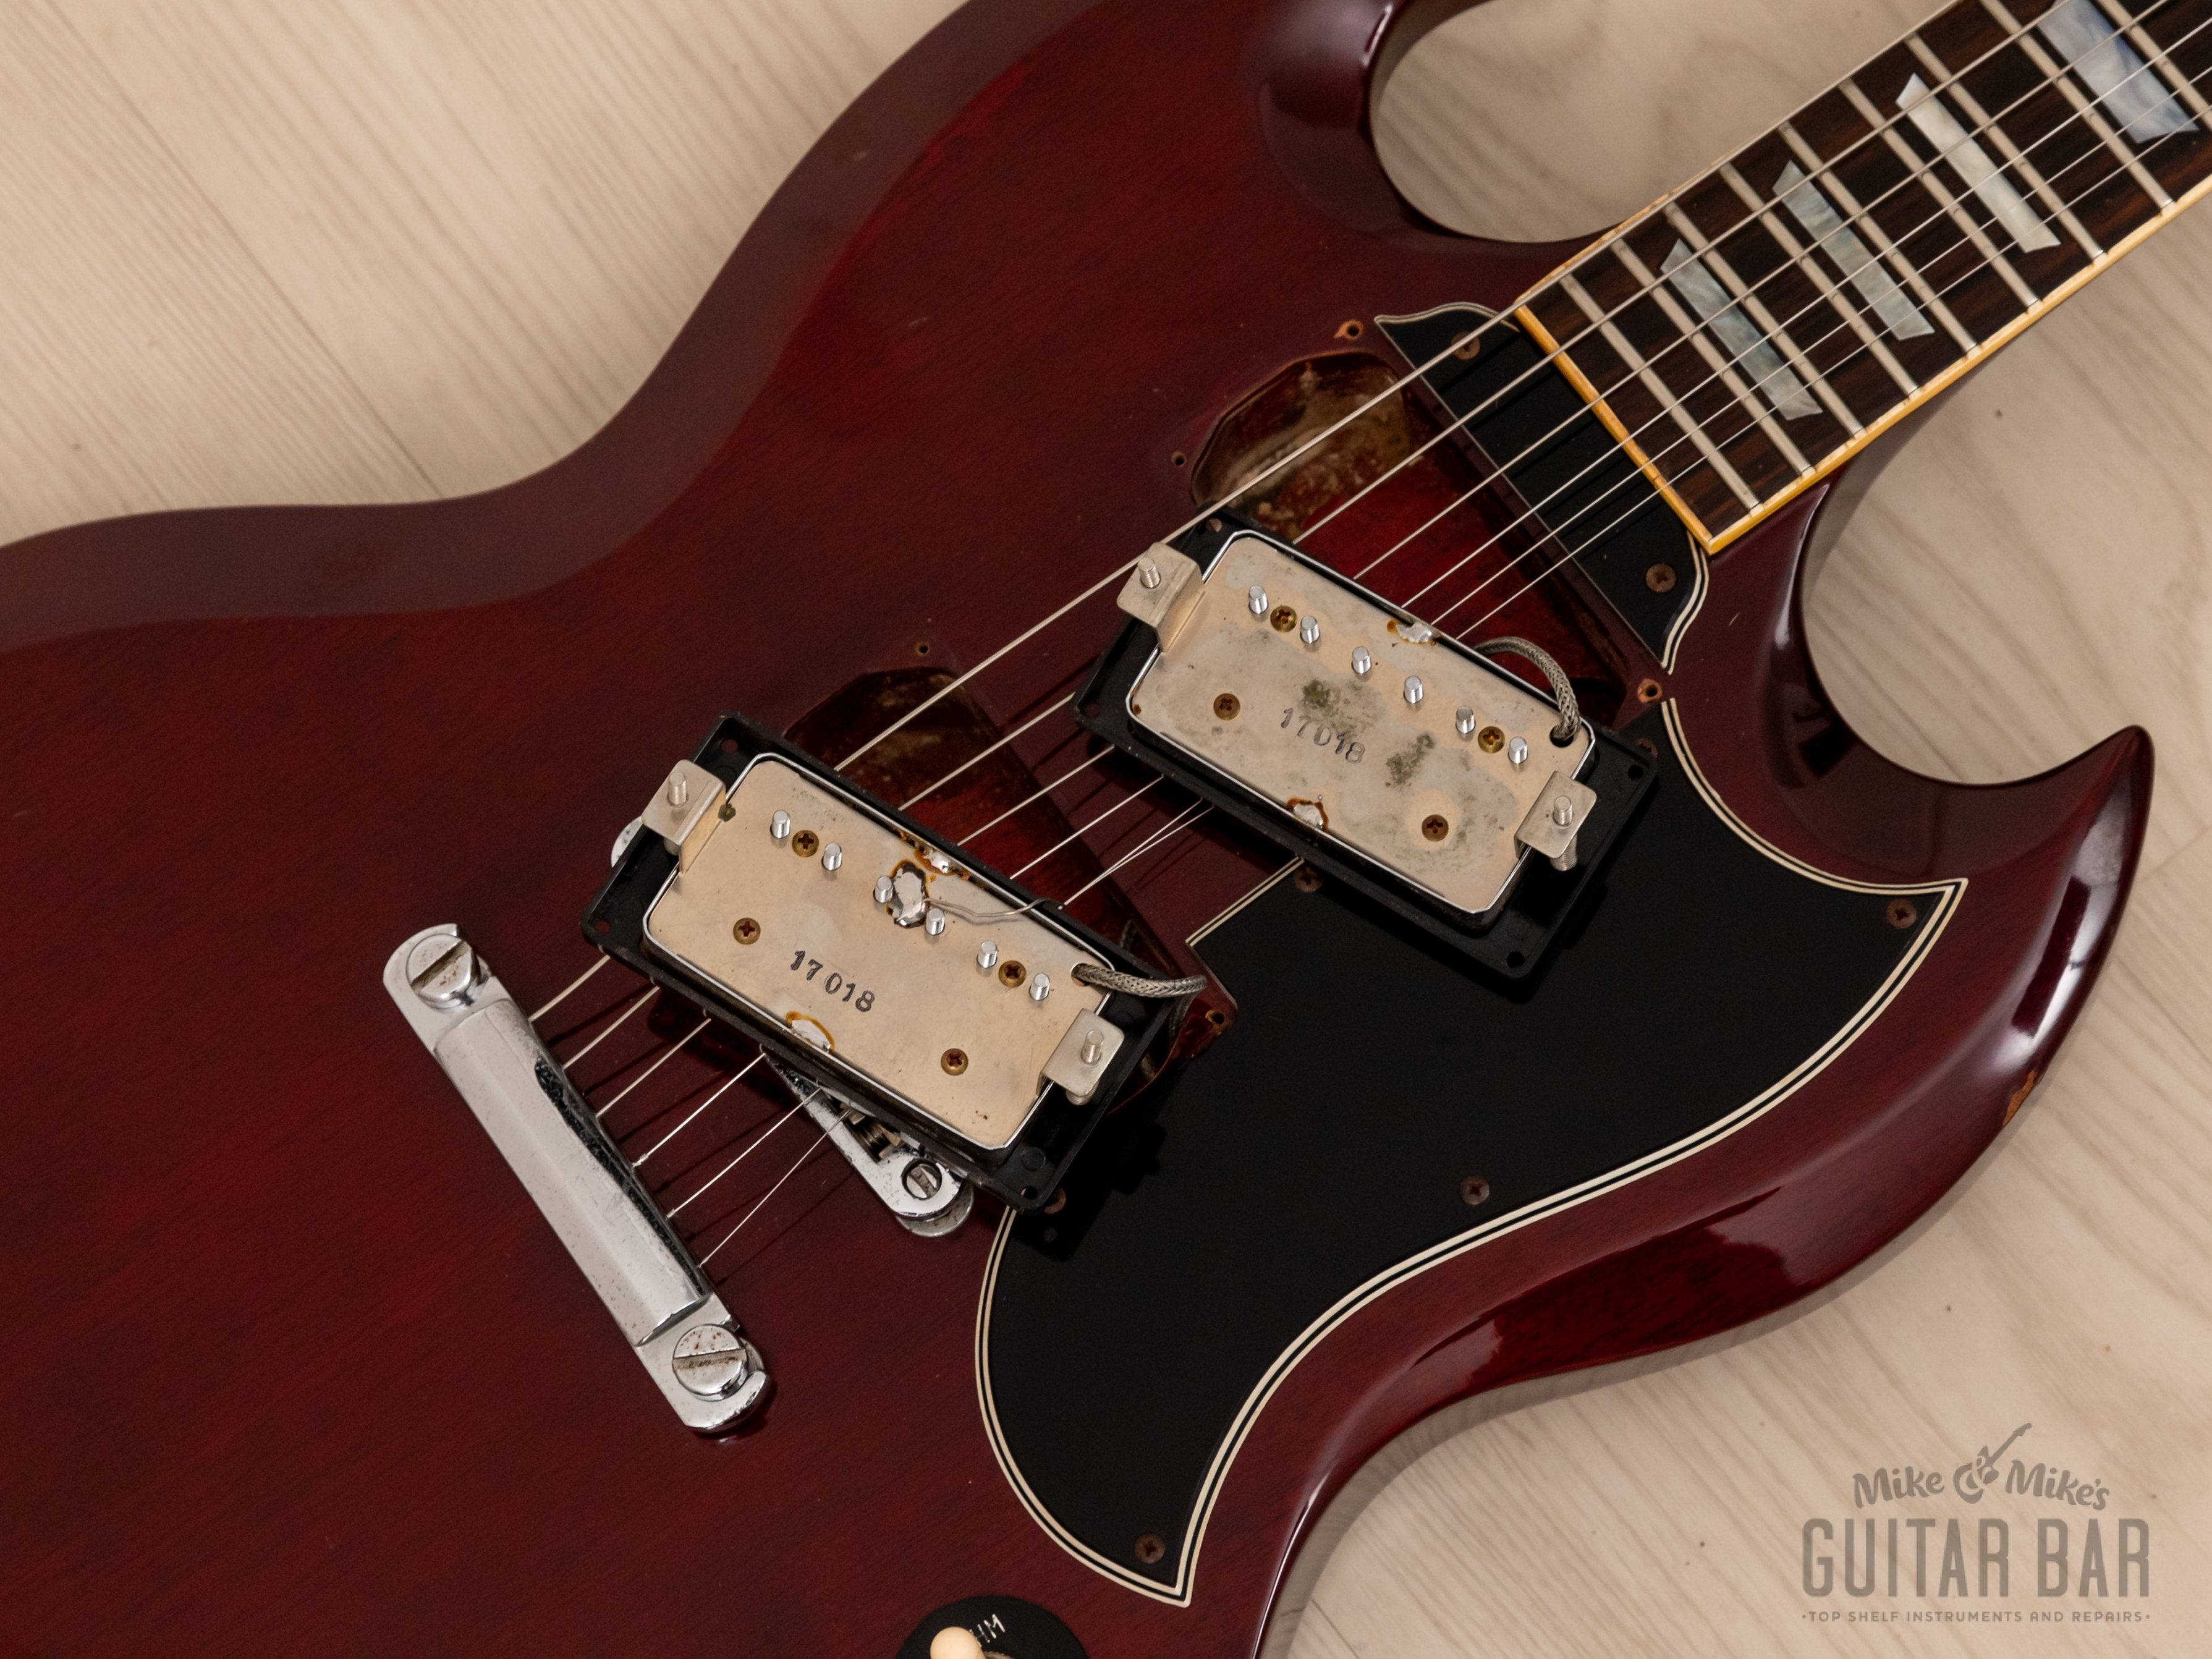 1977 Greco SG-600 SG Standard Vintage Guitar Cherry w/ Case, Japan Fujigen